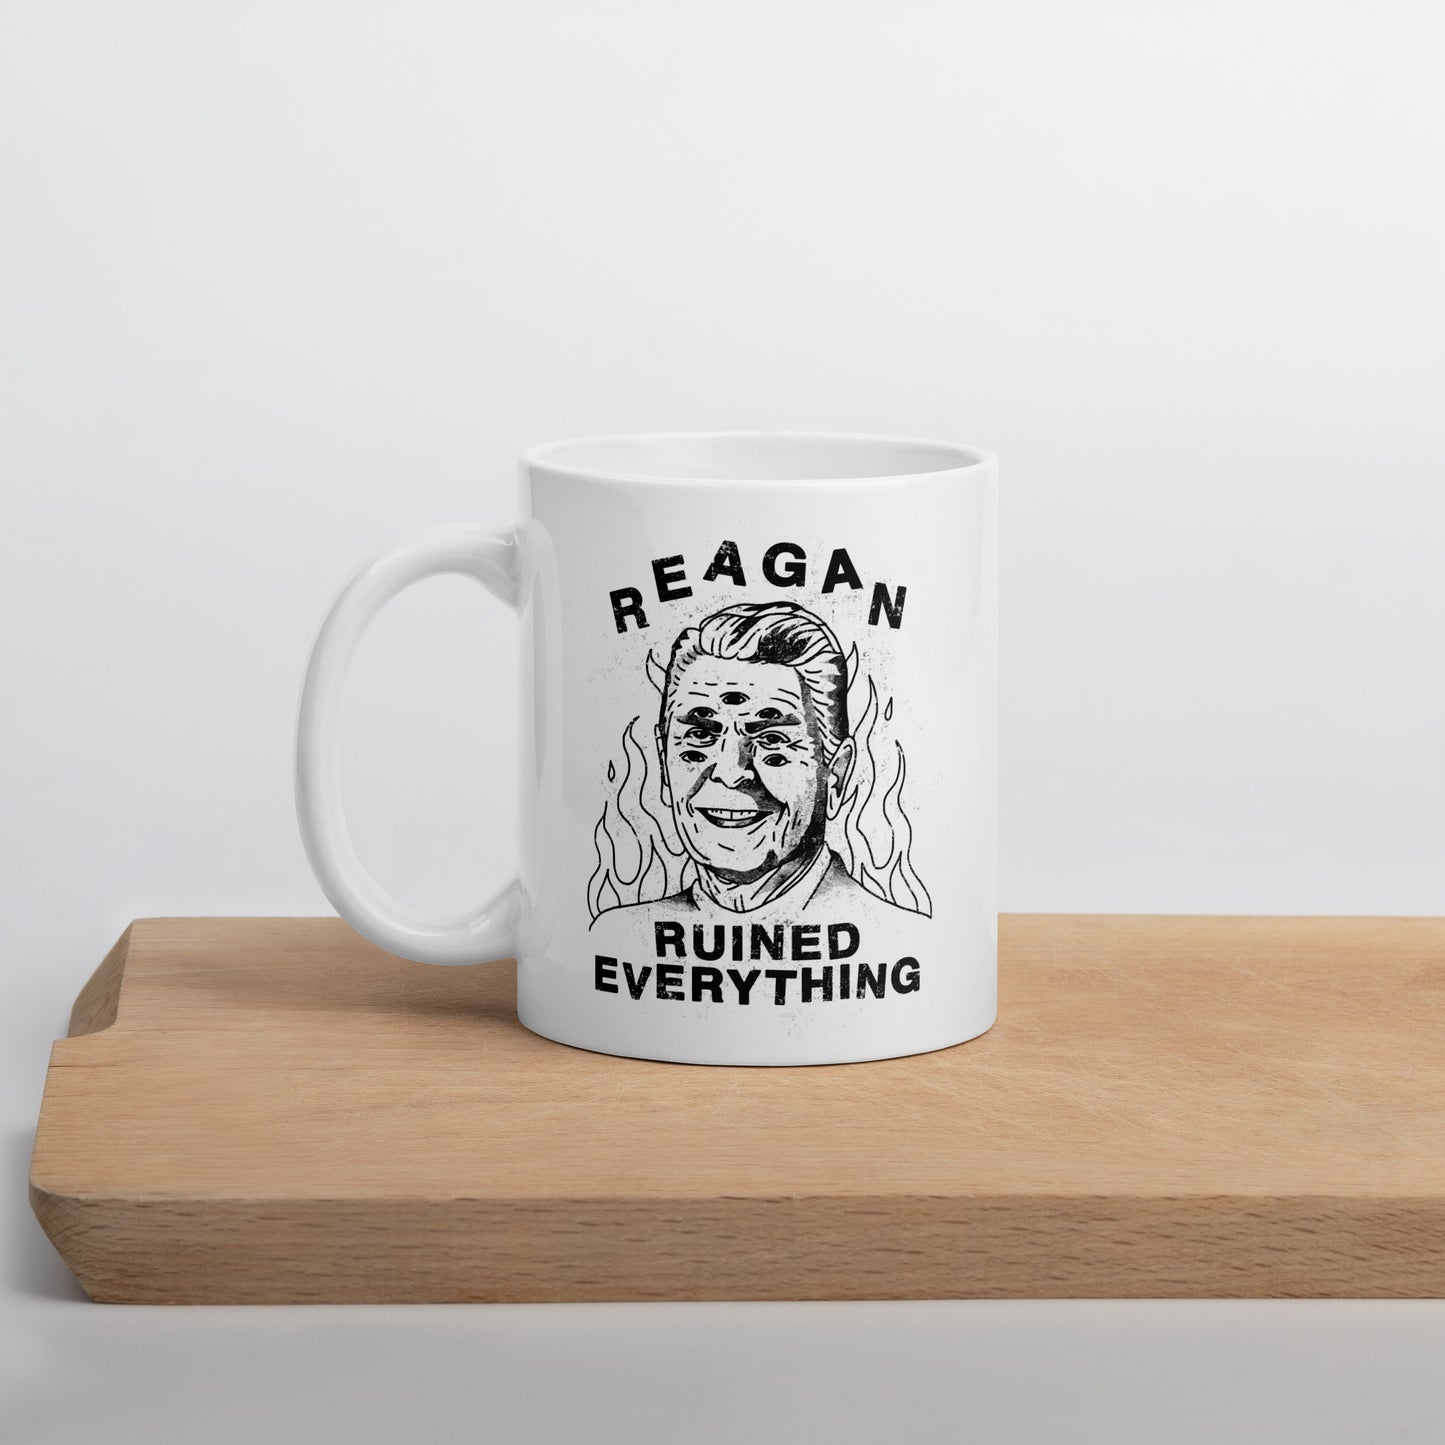 Reagan Ruined Everything! Mug